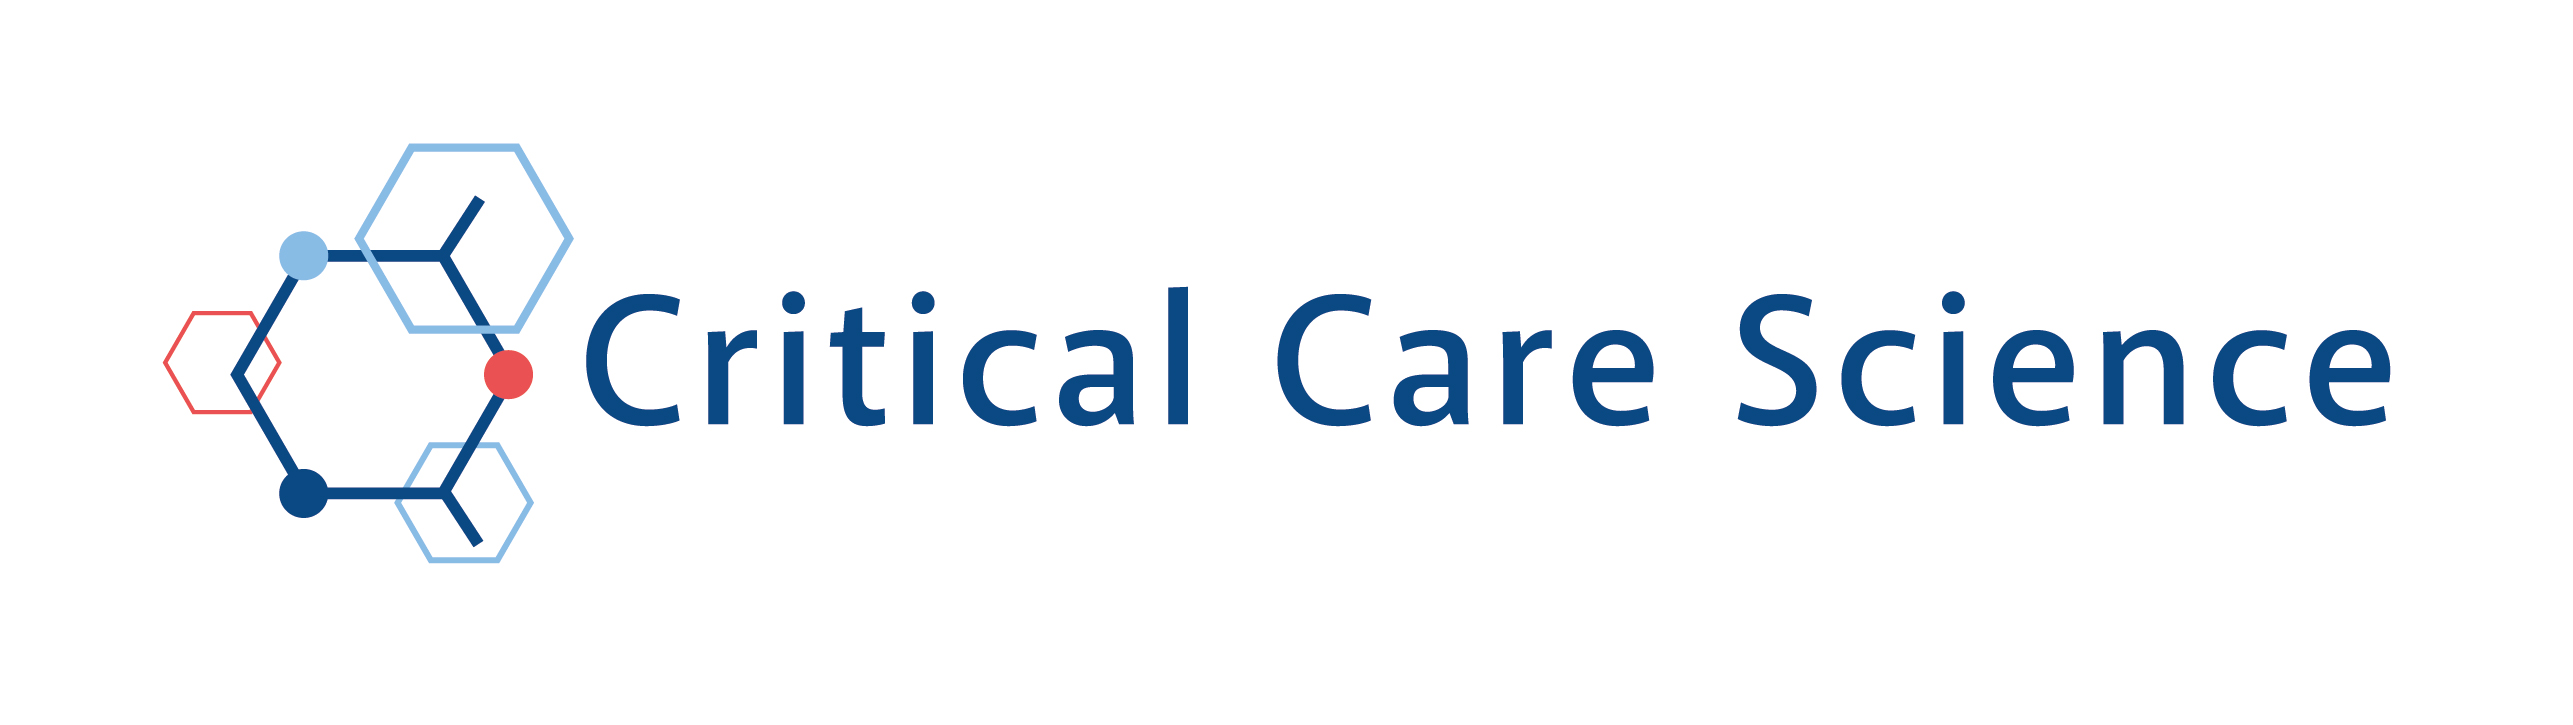 Logomarca do periódico: Critical Care Science